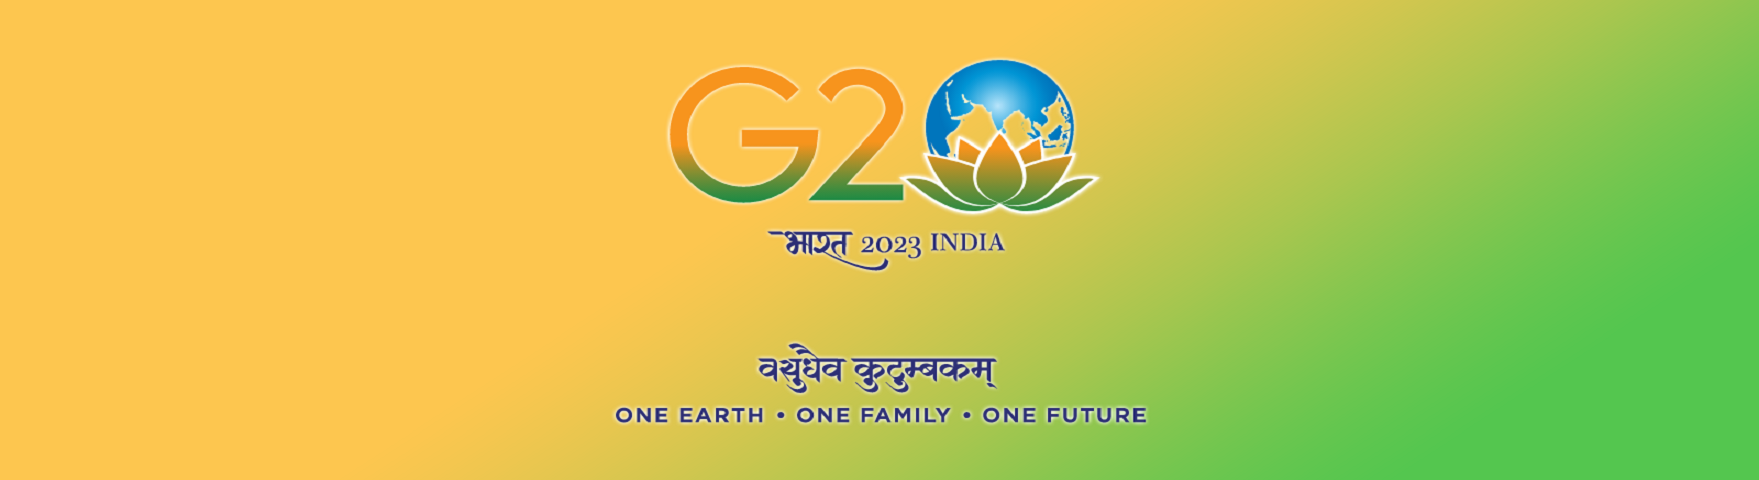 G20 one Earth One Faimly One Future